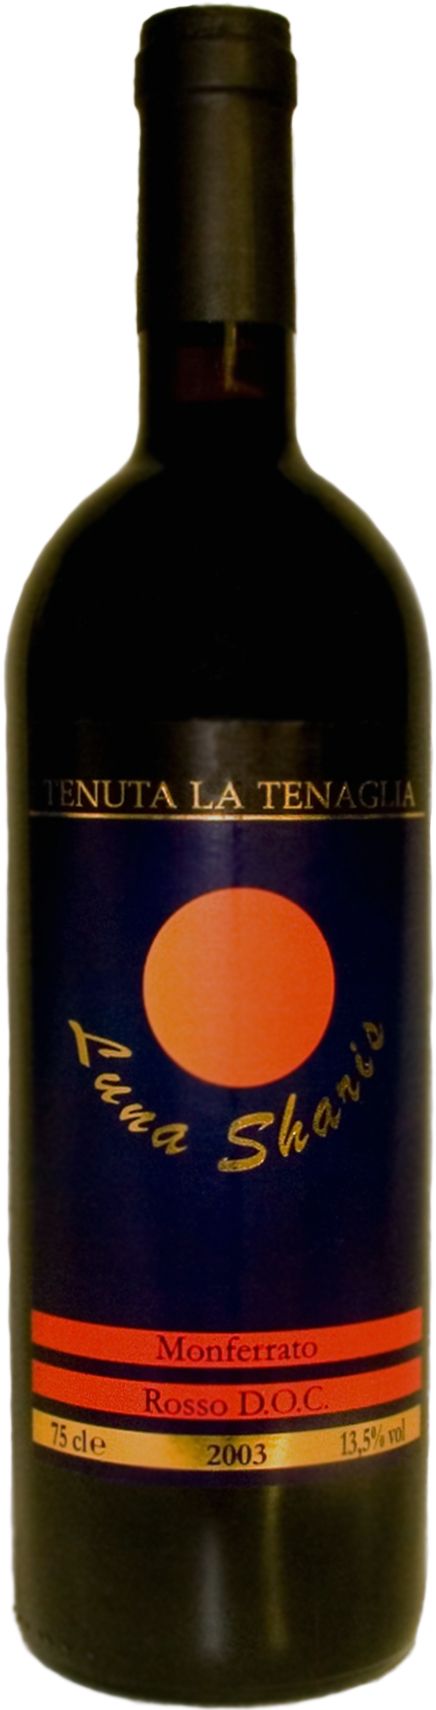 Tenuta La Tenaglia, Monferrato Rosso Luna Sharis, 2003